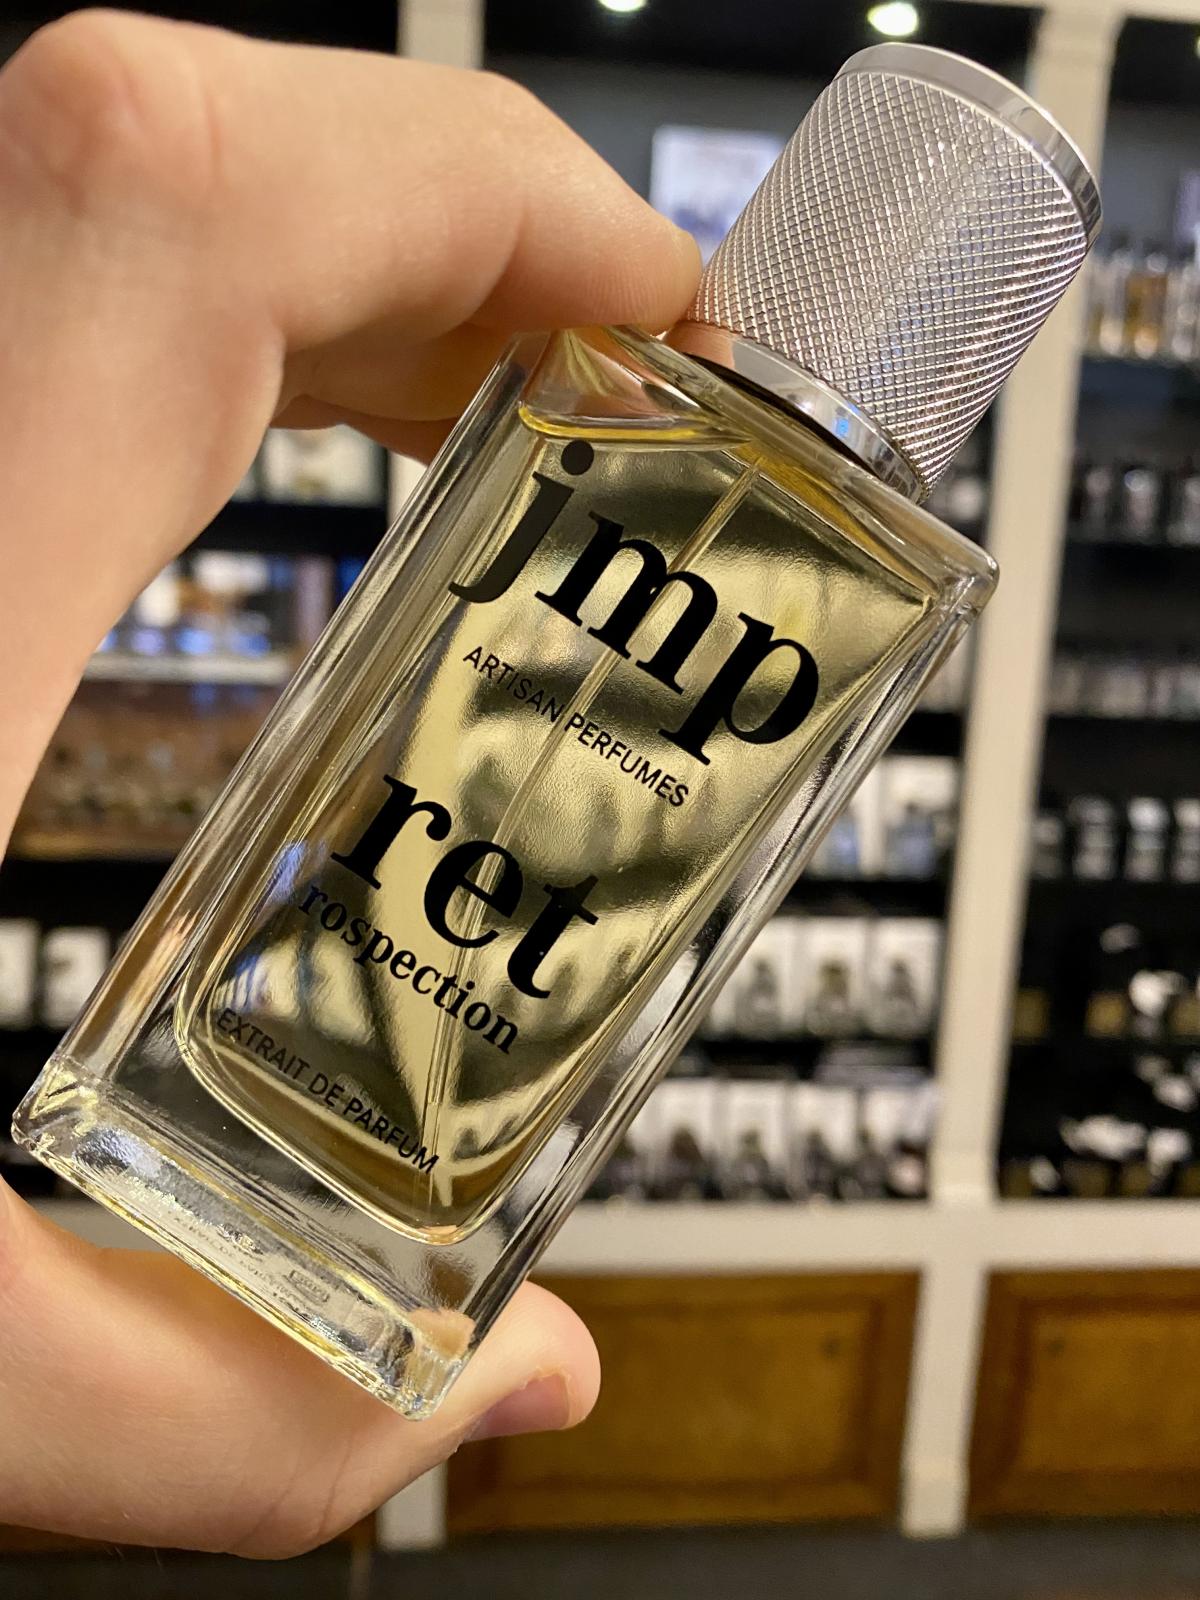 Retrospection JMP Artisan Perfumes perfume - a new fragrance for women ...